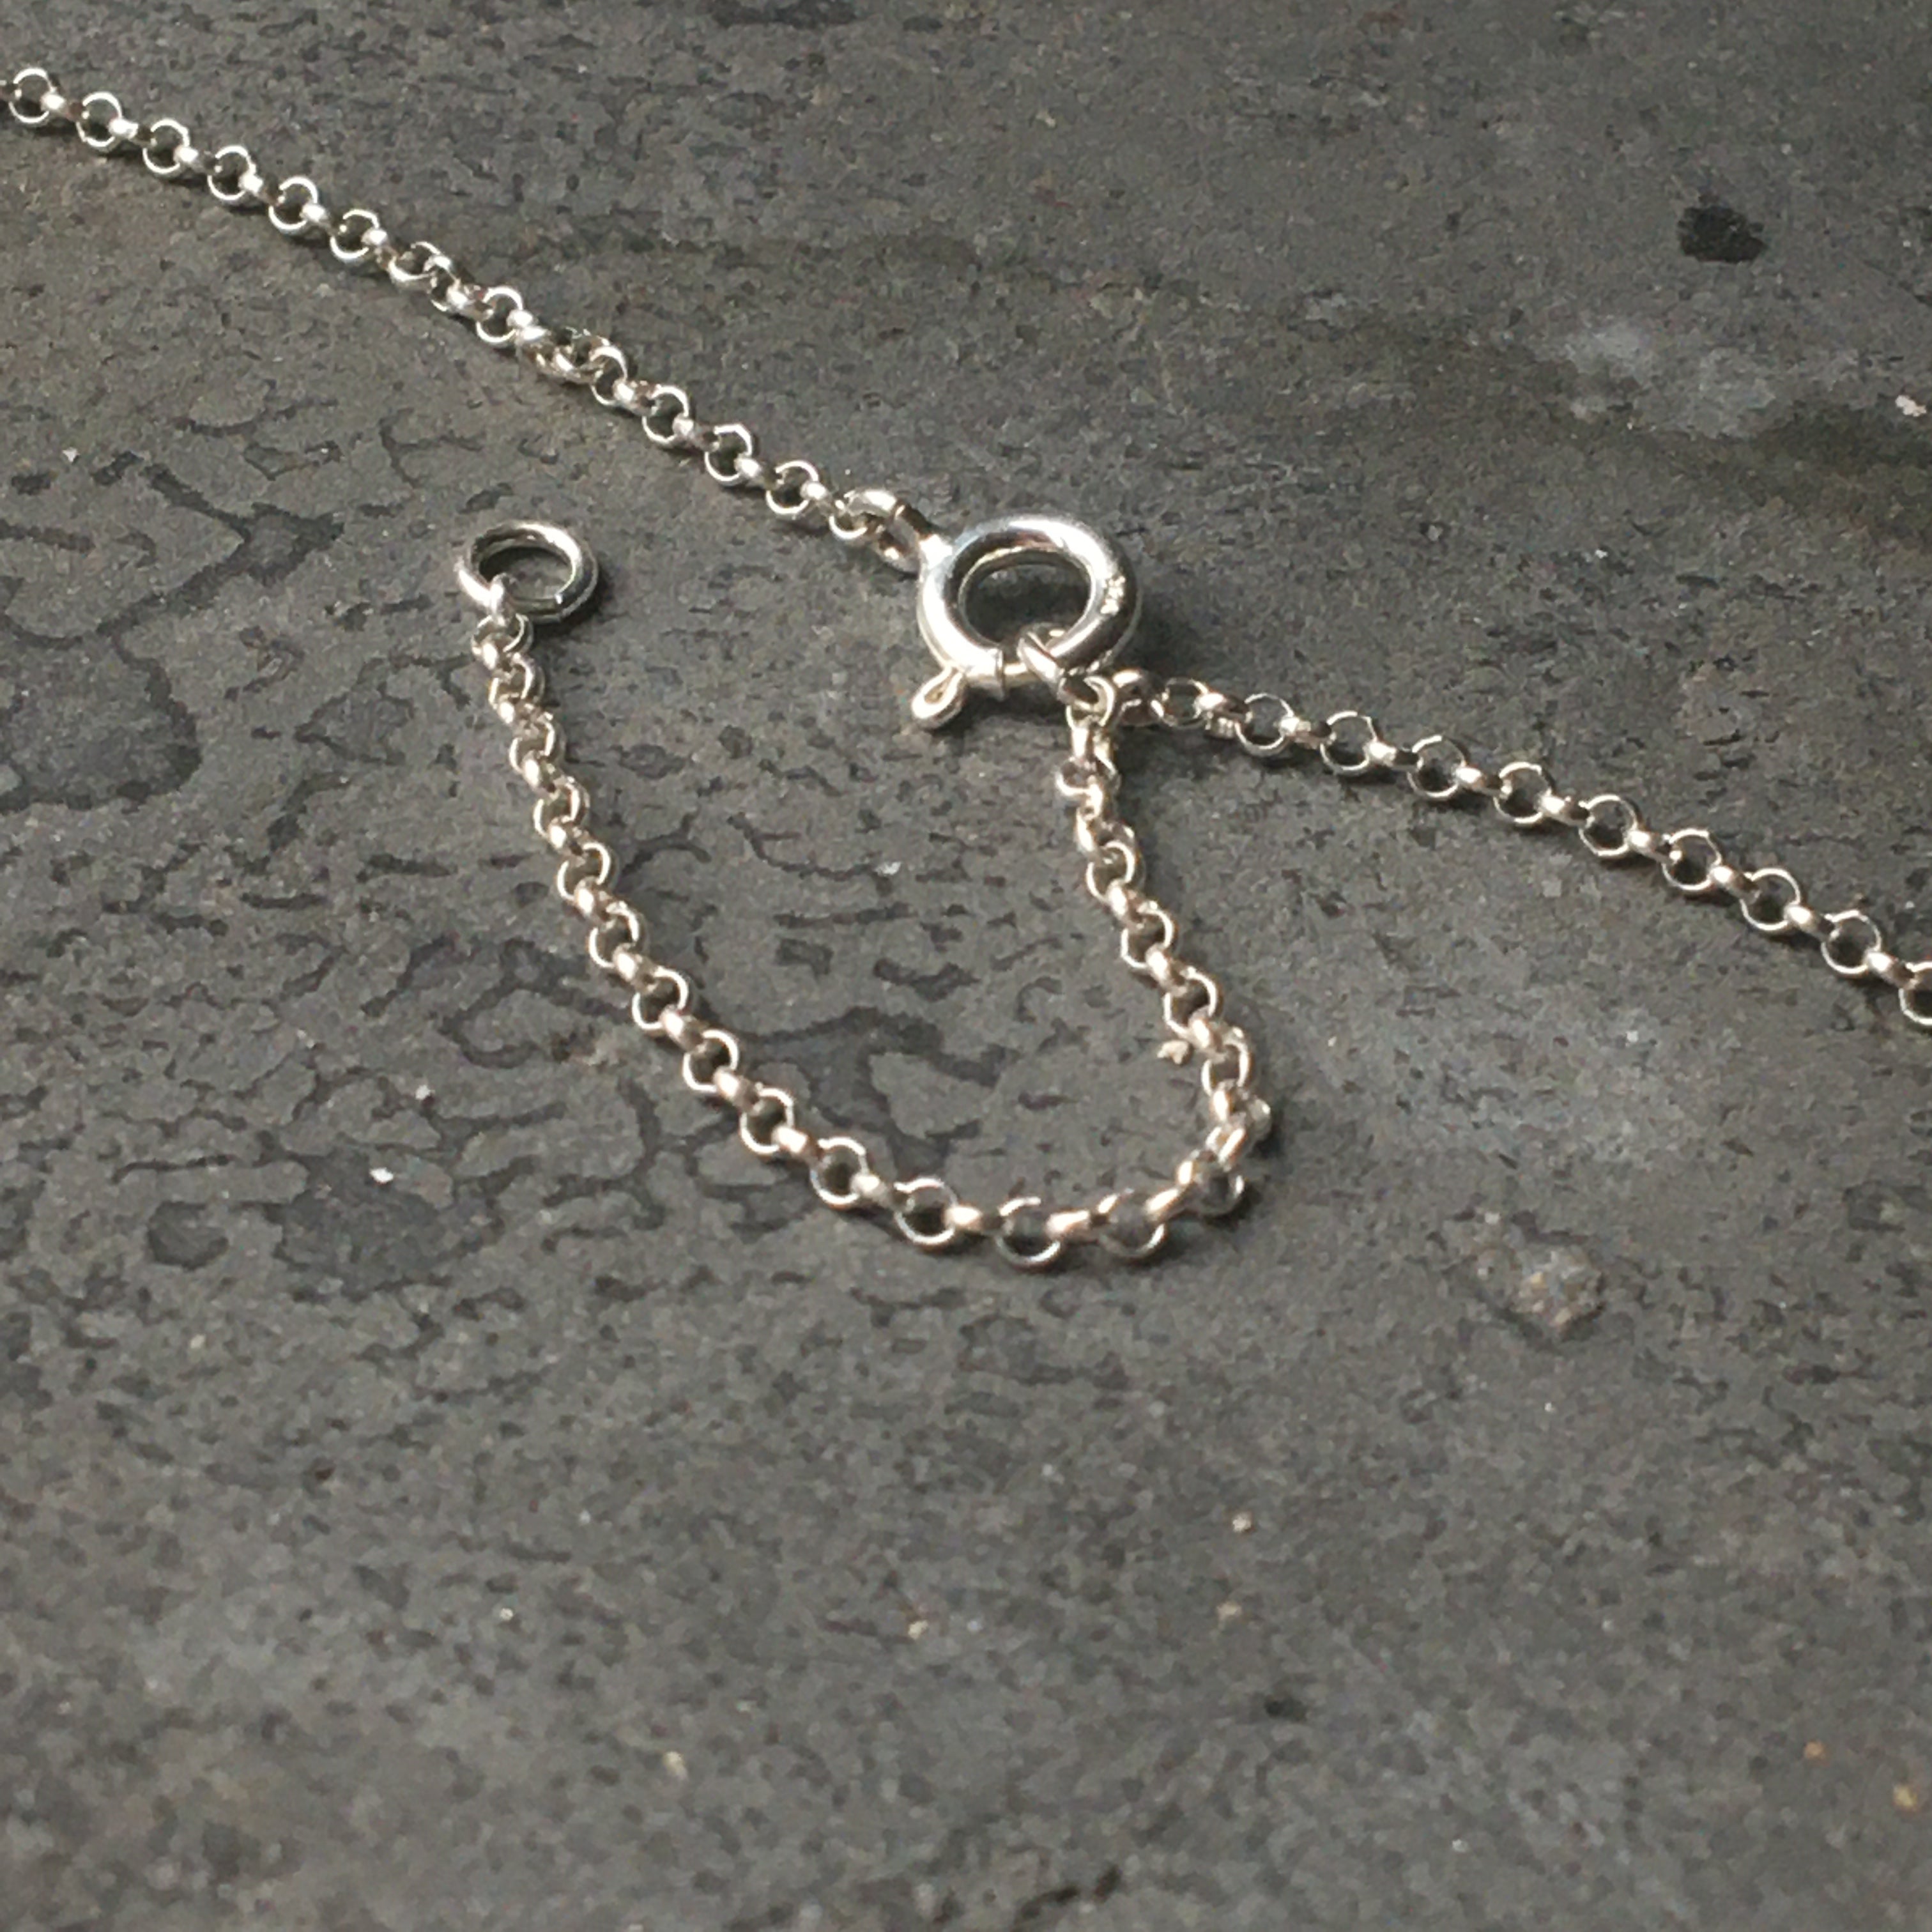 Chain Bracelet Silver Minimalist, In Your Custom Length – Wild & Arrow